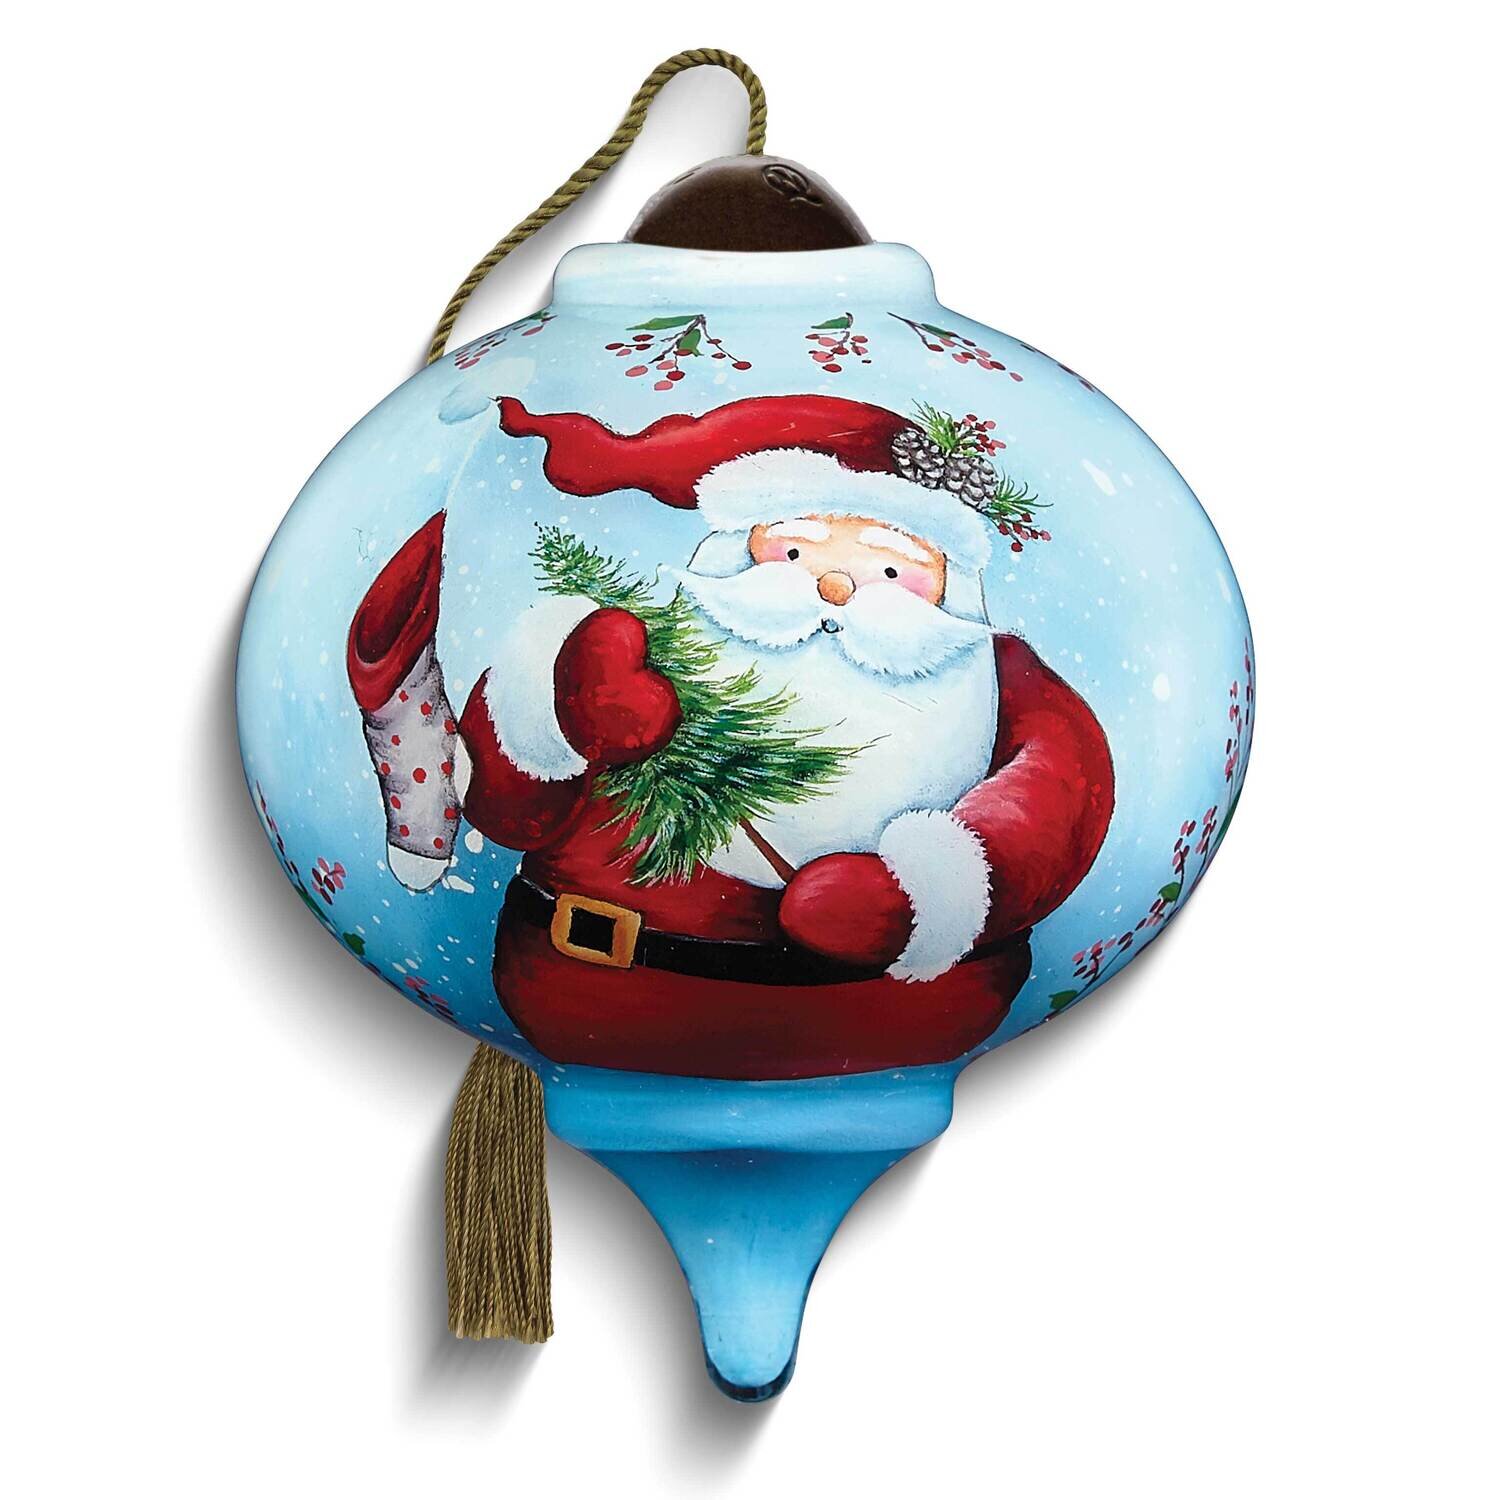 Neqwa Art Whimsical Santa With Tree and Stocking Ornament GM25378